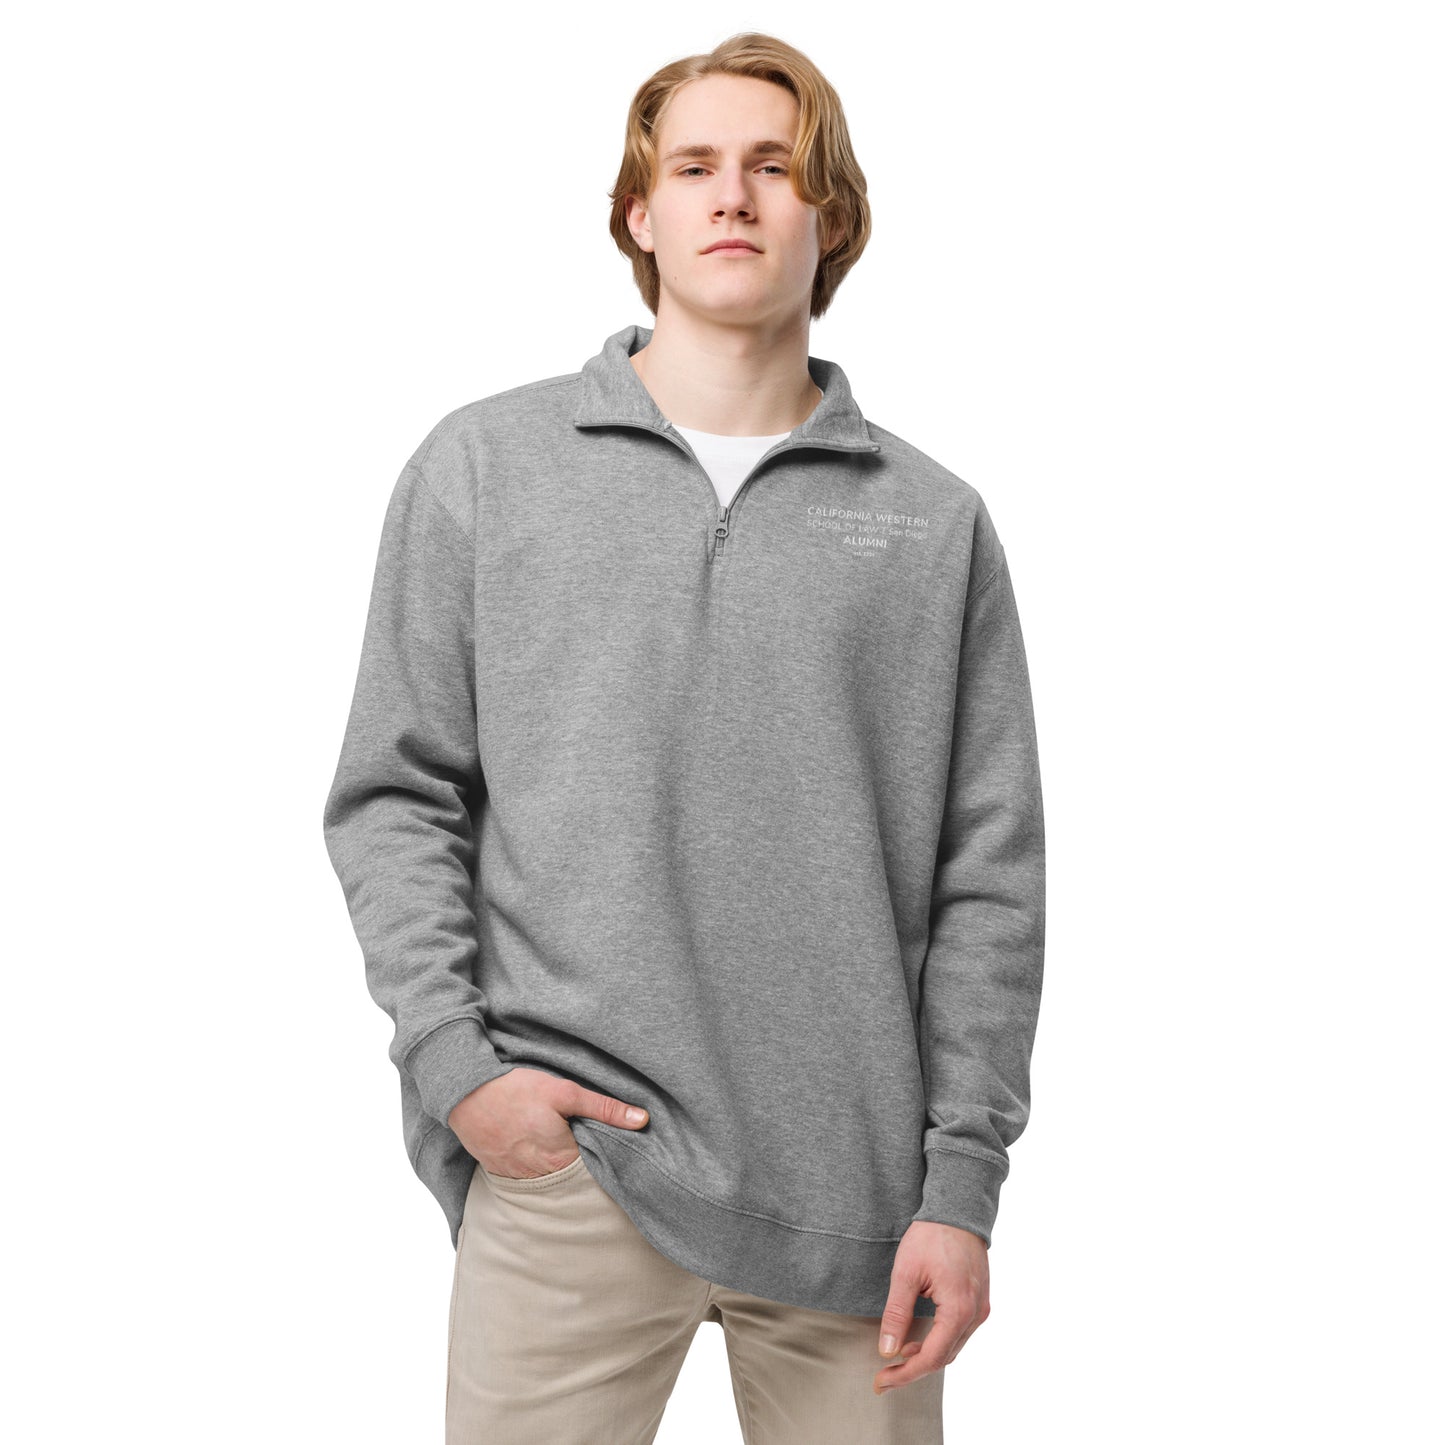 Alumni fleece pullover